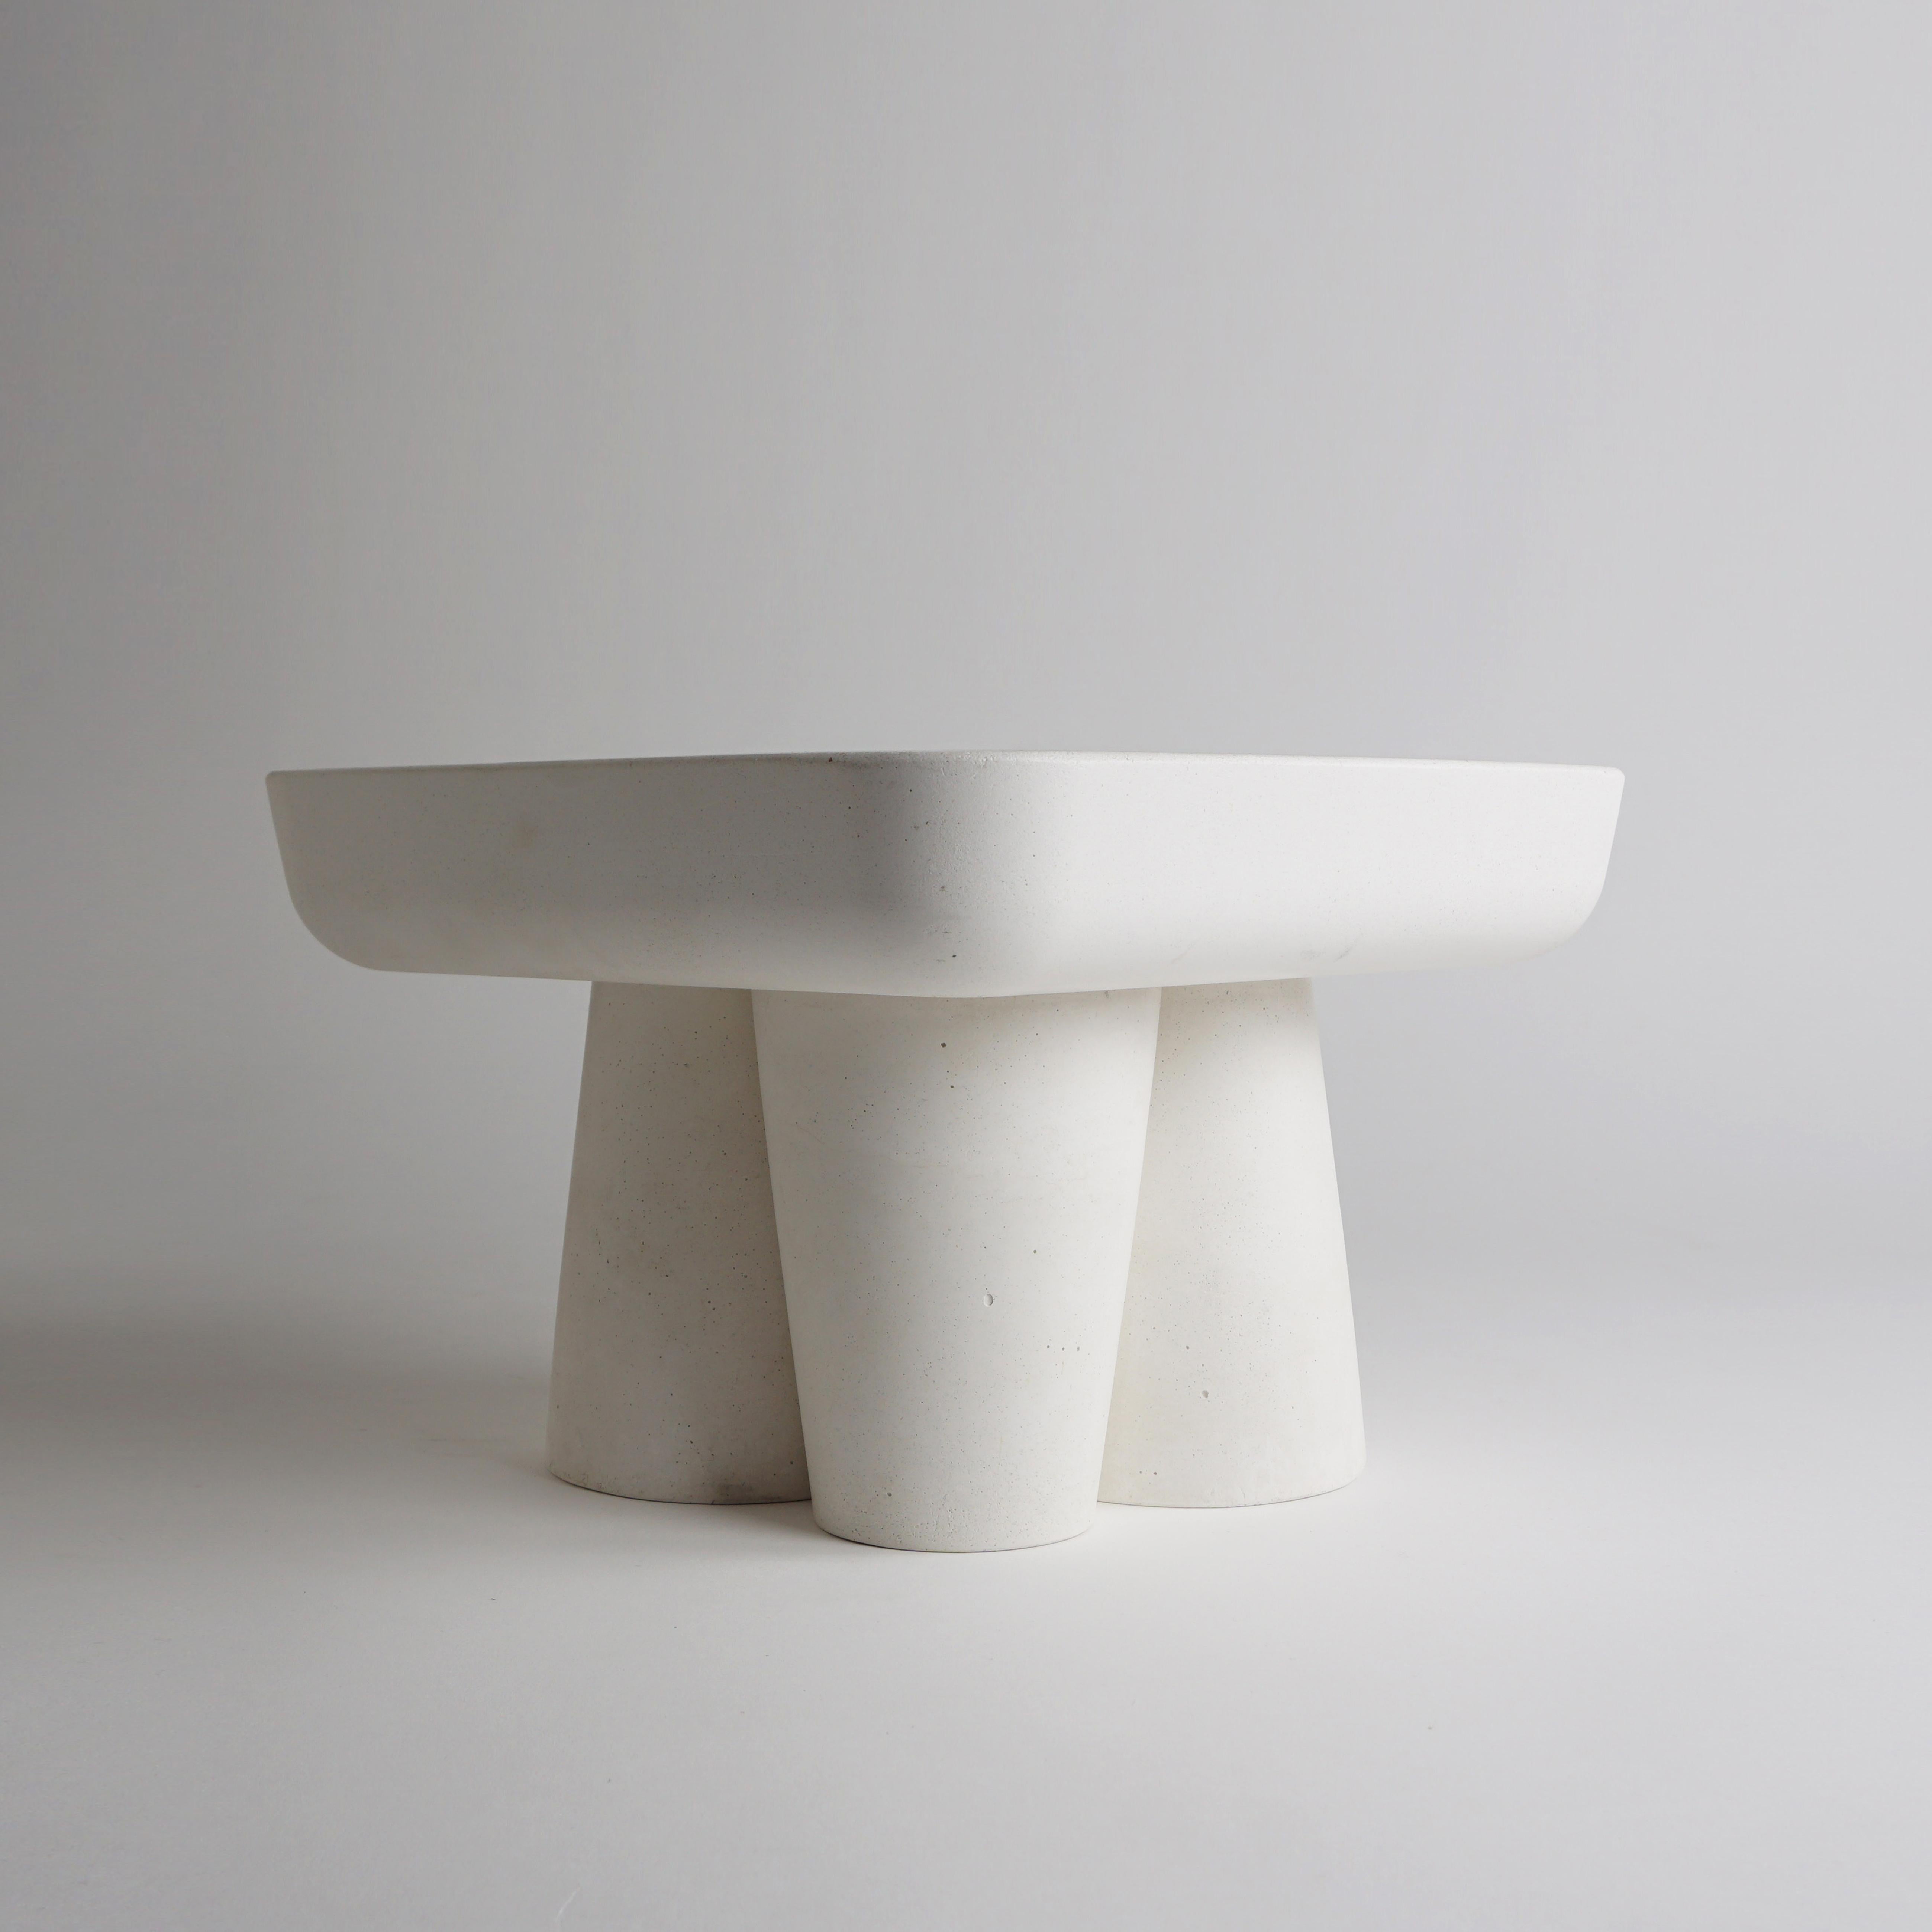 Organique Support de table / porte-livres sculptural 